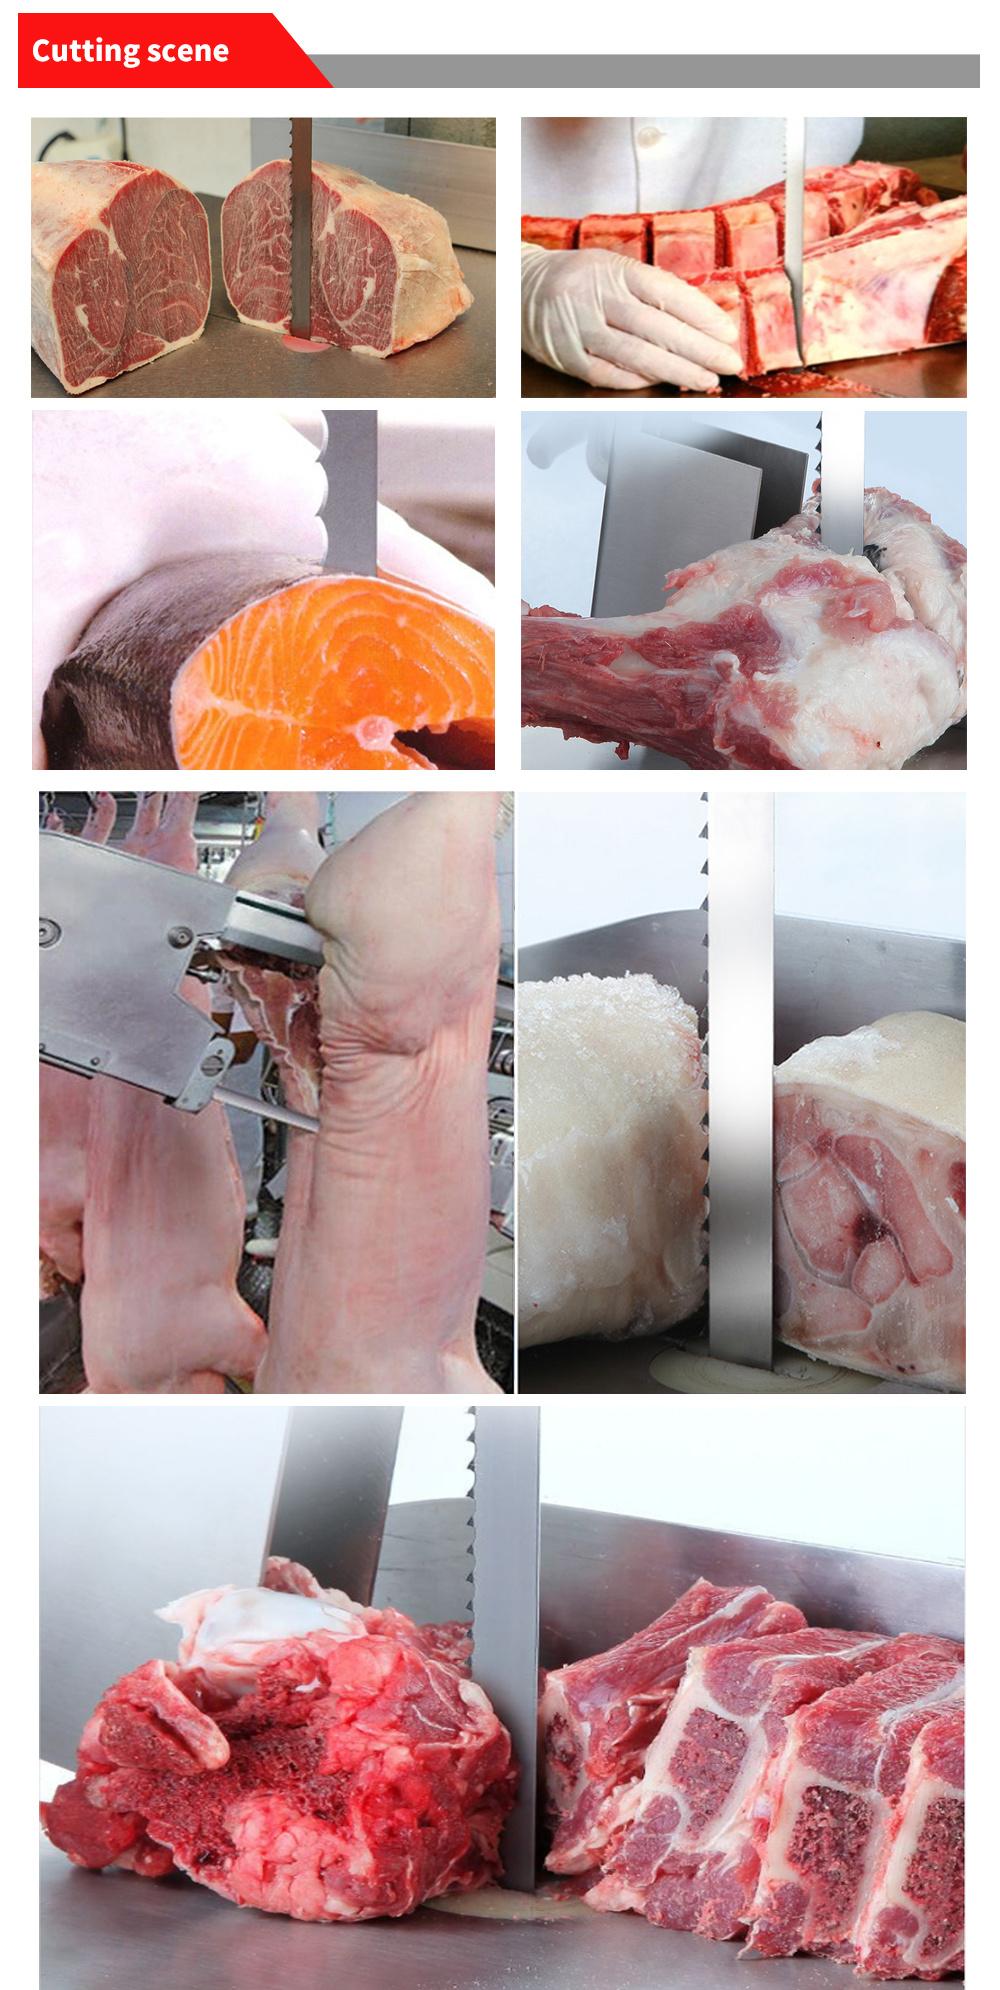 Pilihu 16X0.56X4t Meat Bone Cutting Band Saw Blade for Frozen Food